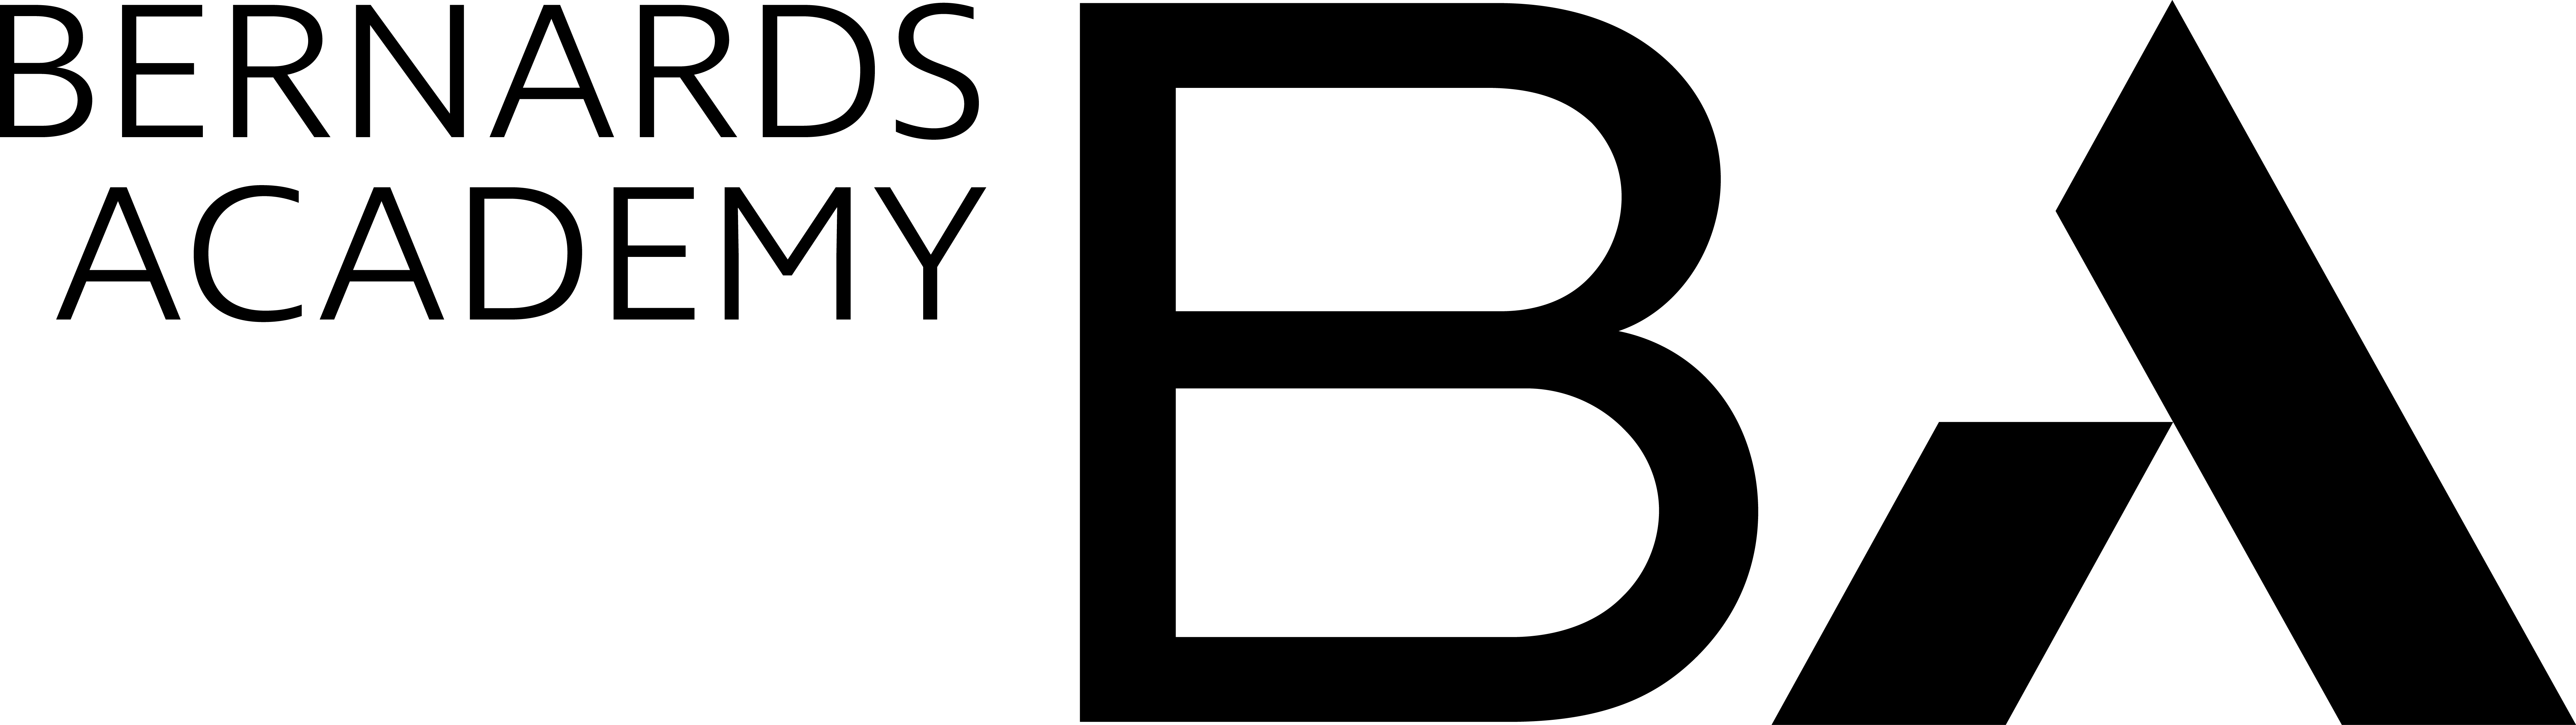 Bernards Academy Logo schwarz